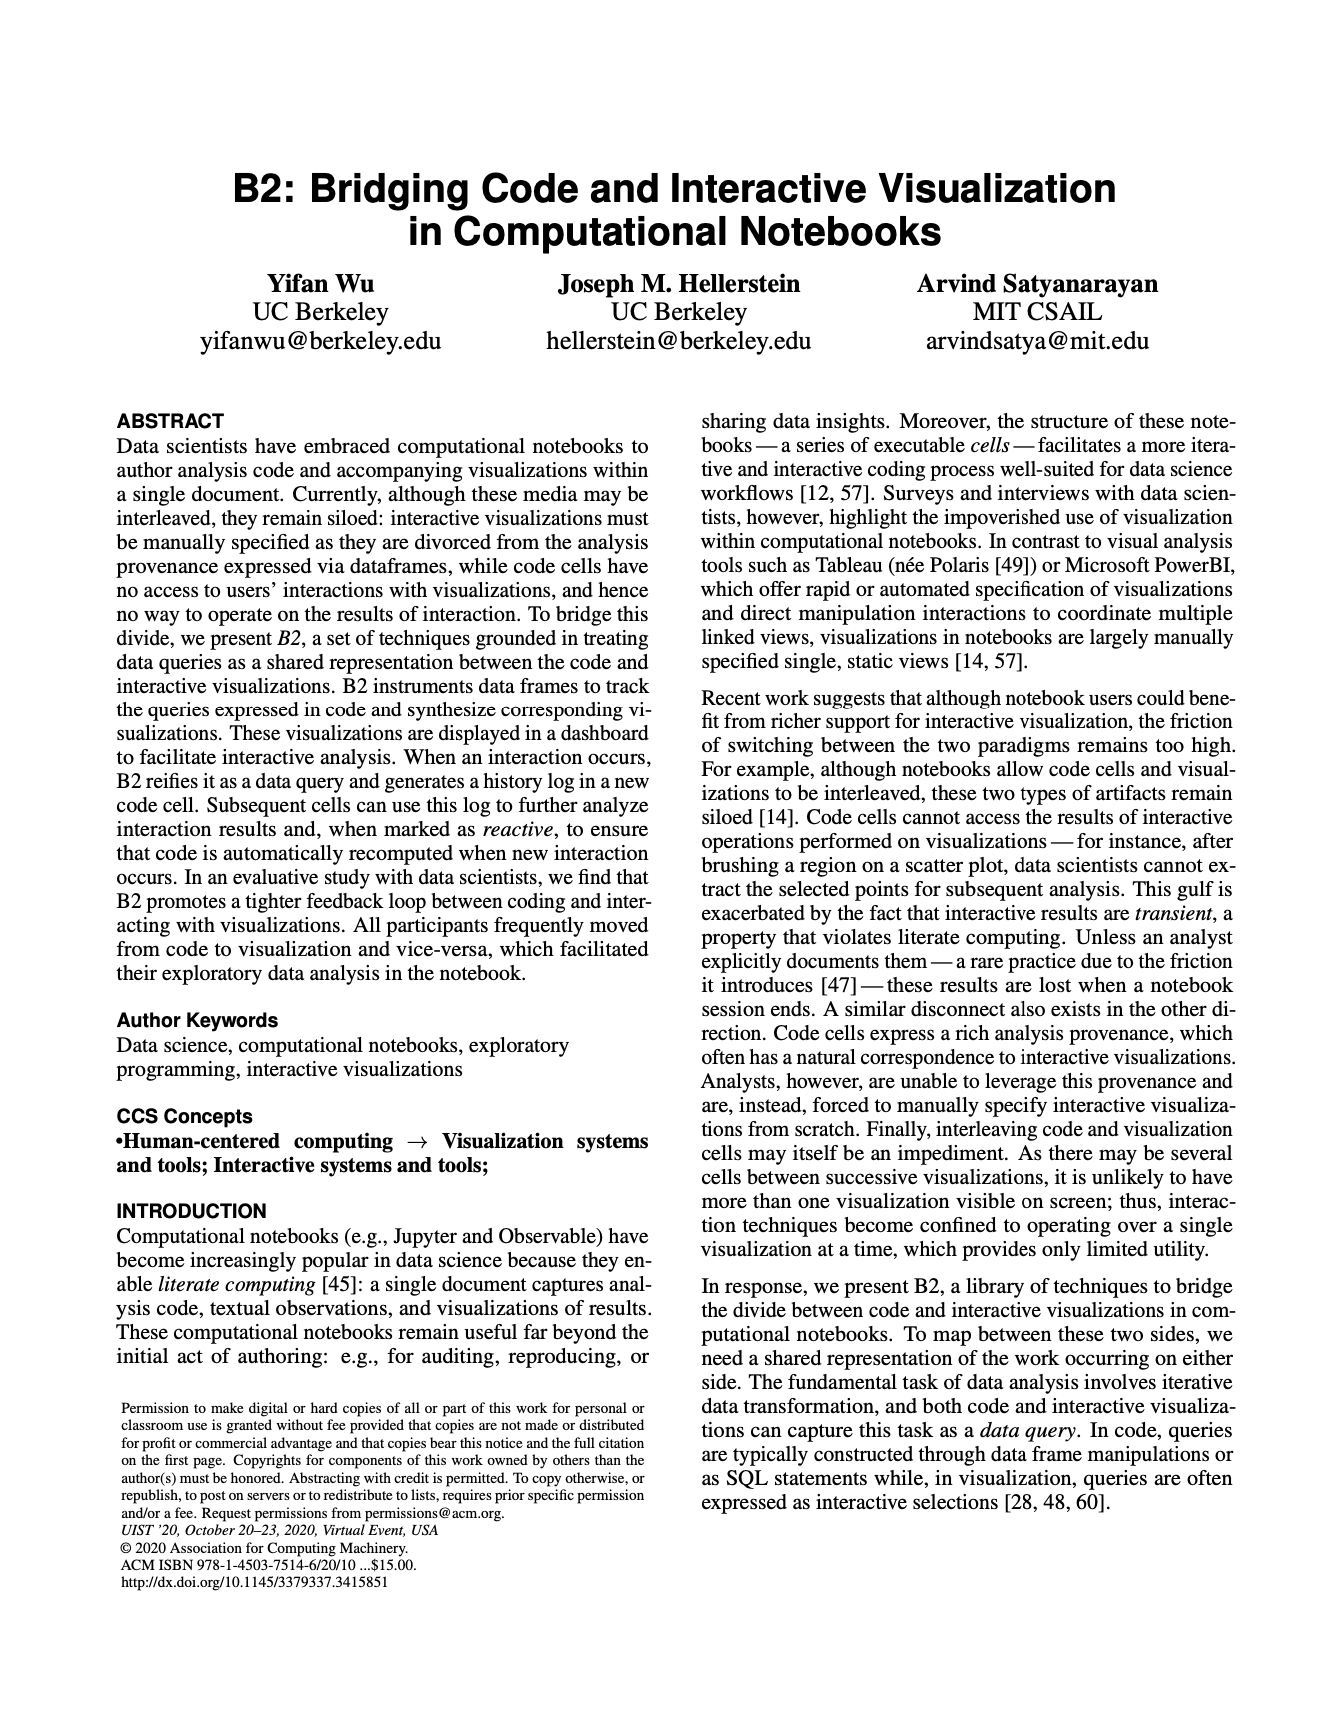 B2: Bridging Code and Interactive Visualization in Computational Notebooks